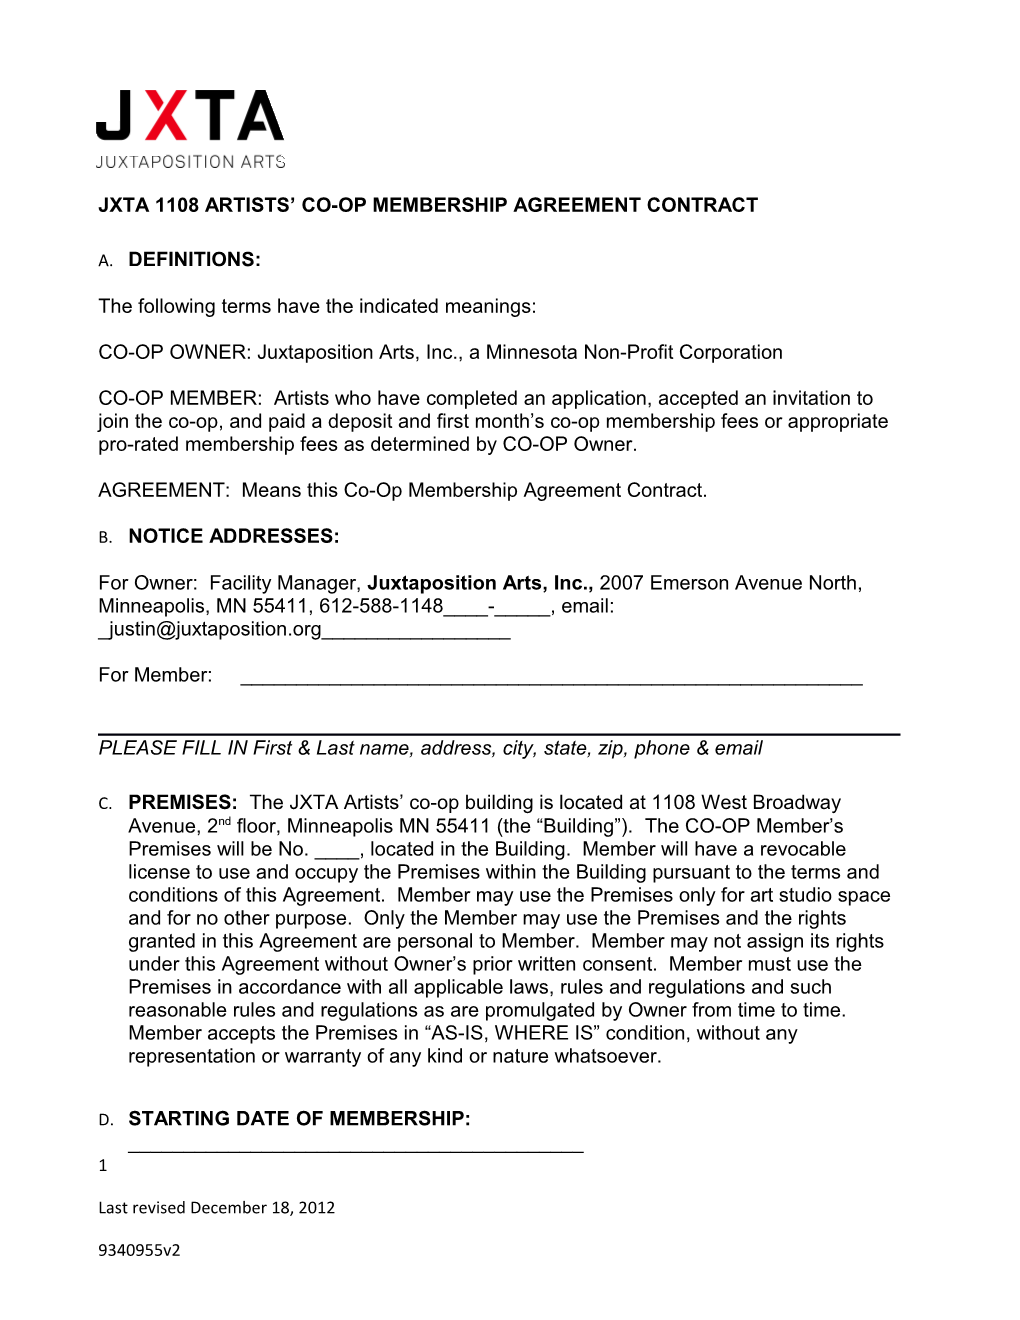 Jxta 1108 Artists Co-Op Membership Agreement Contract